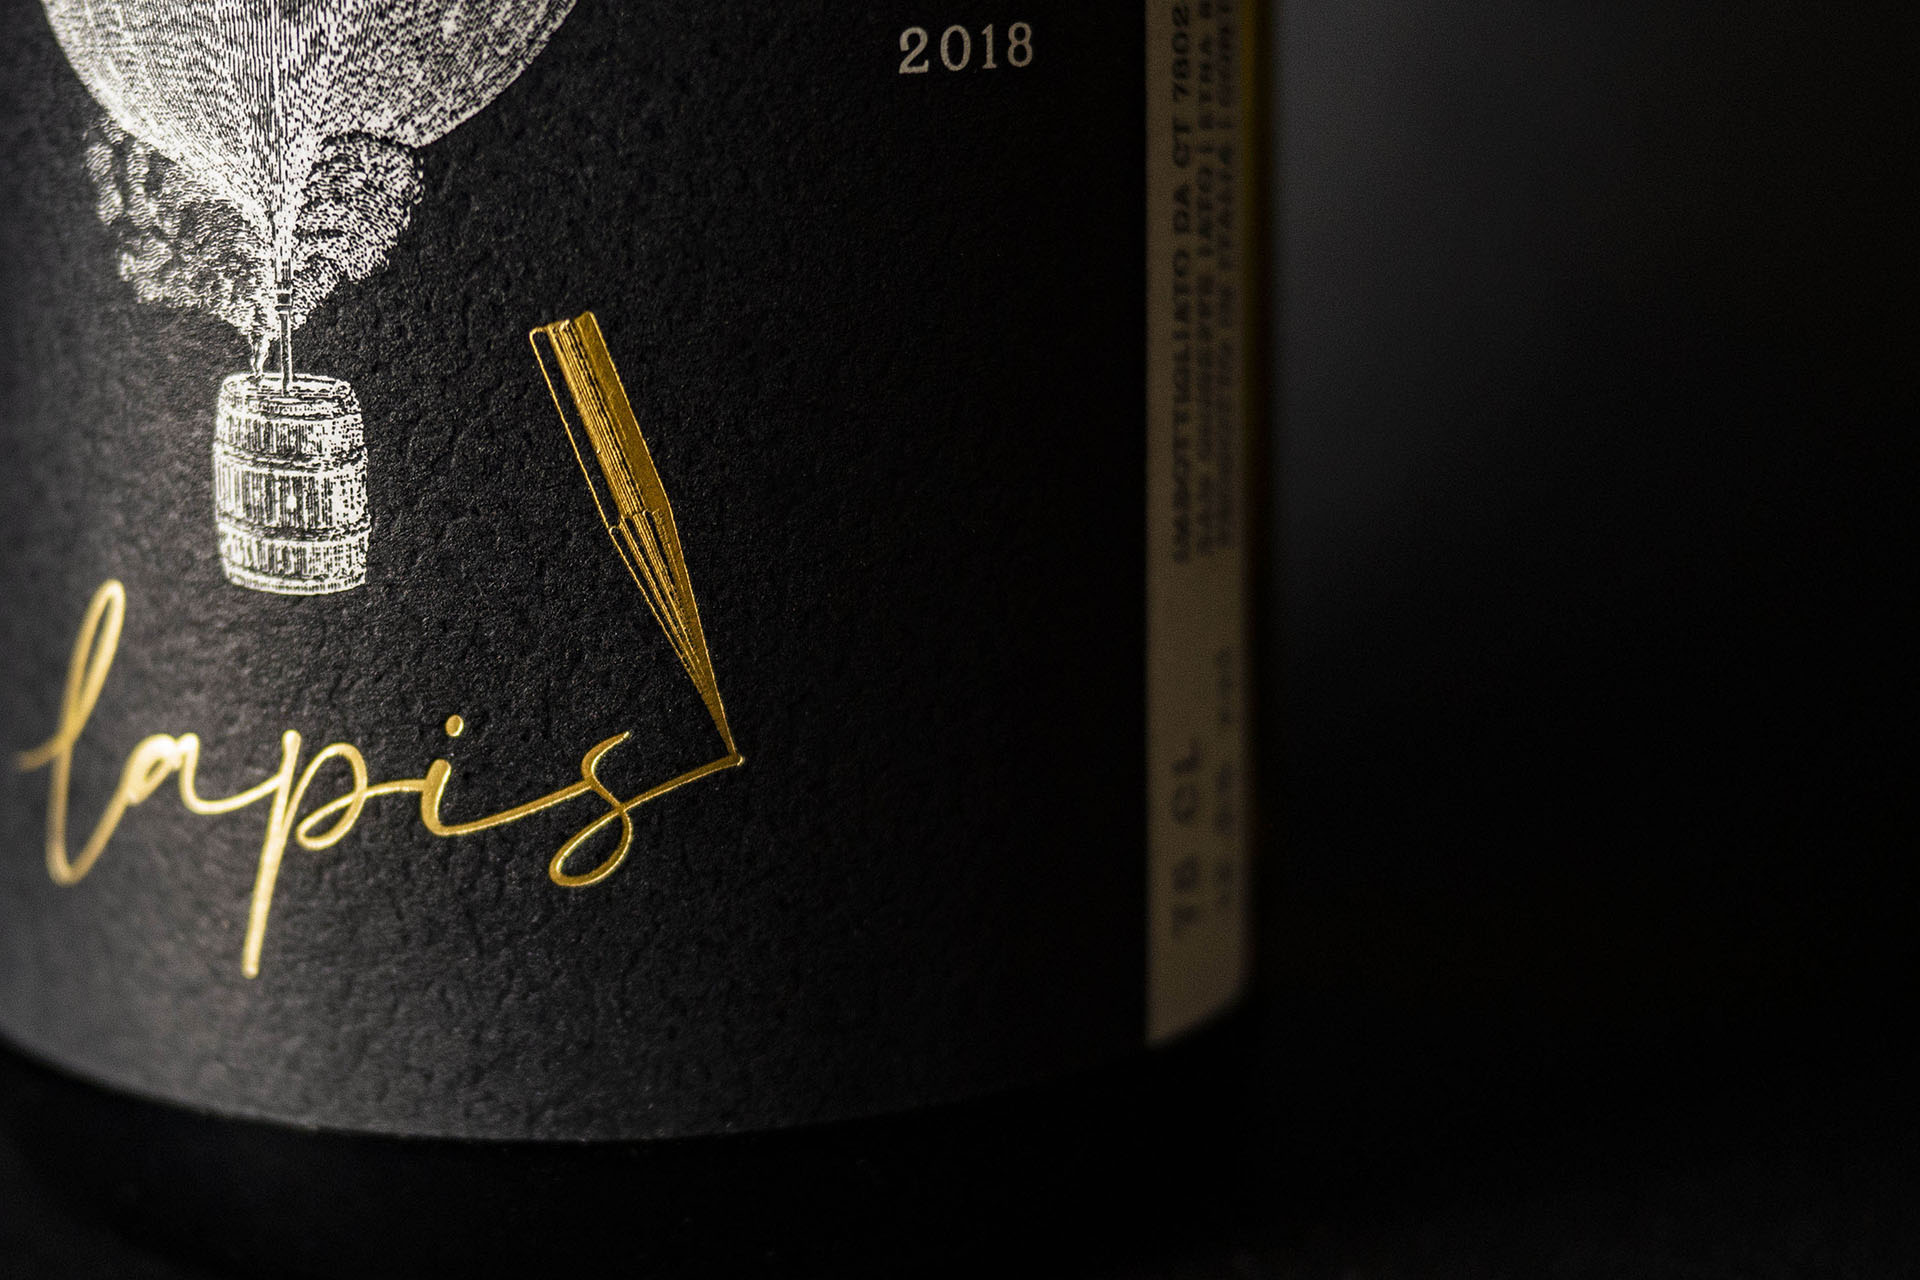 Etichetta vino | Lapis | Azienda Agricola Lisciandrello